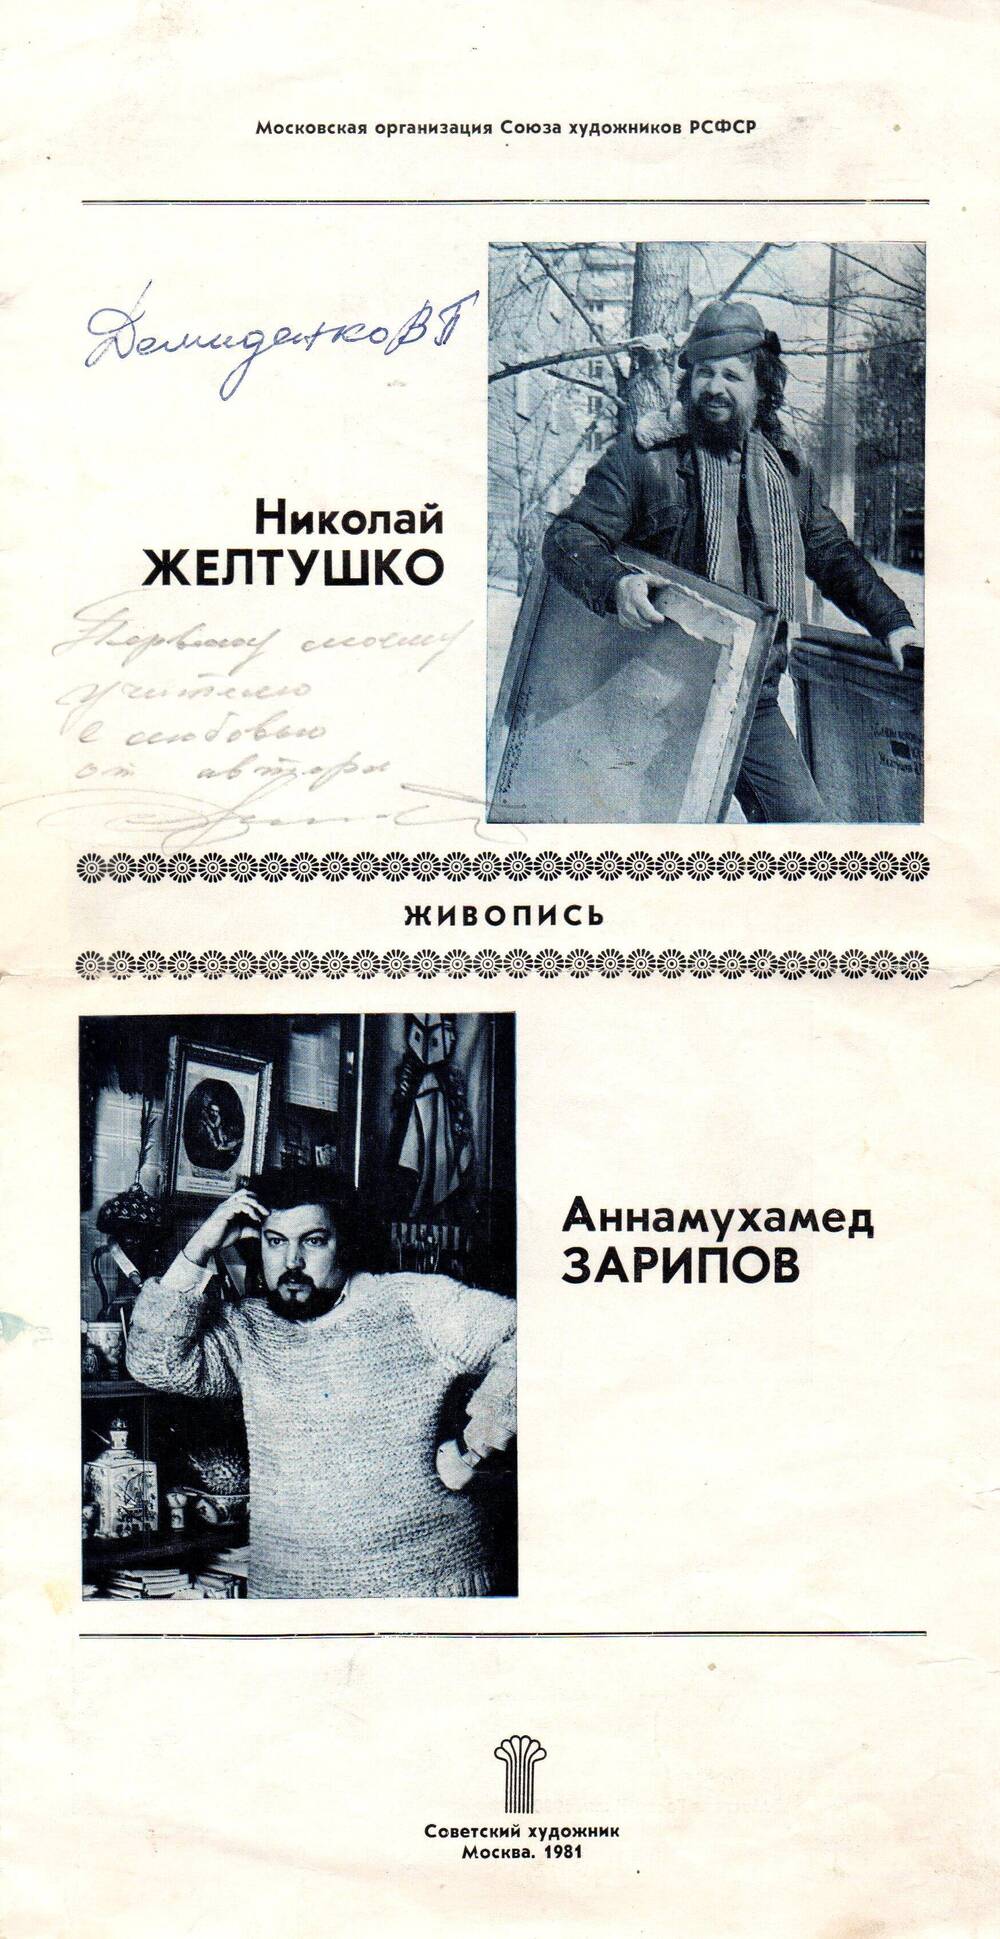 Каталог выставок Н. Желтушко А. Зарипов. 1981г.